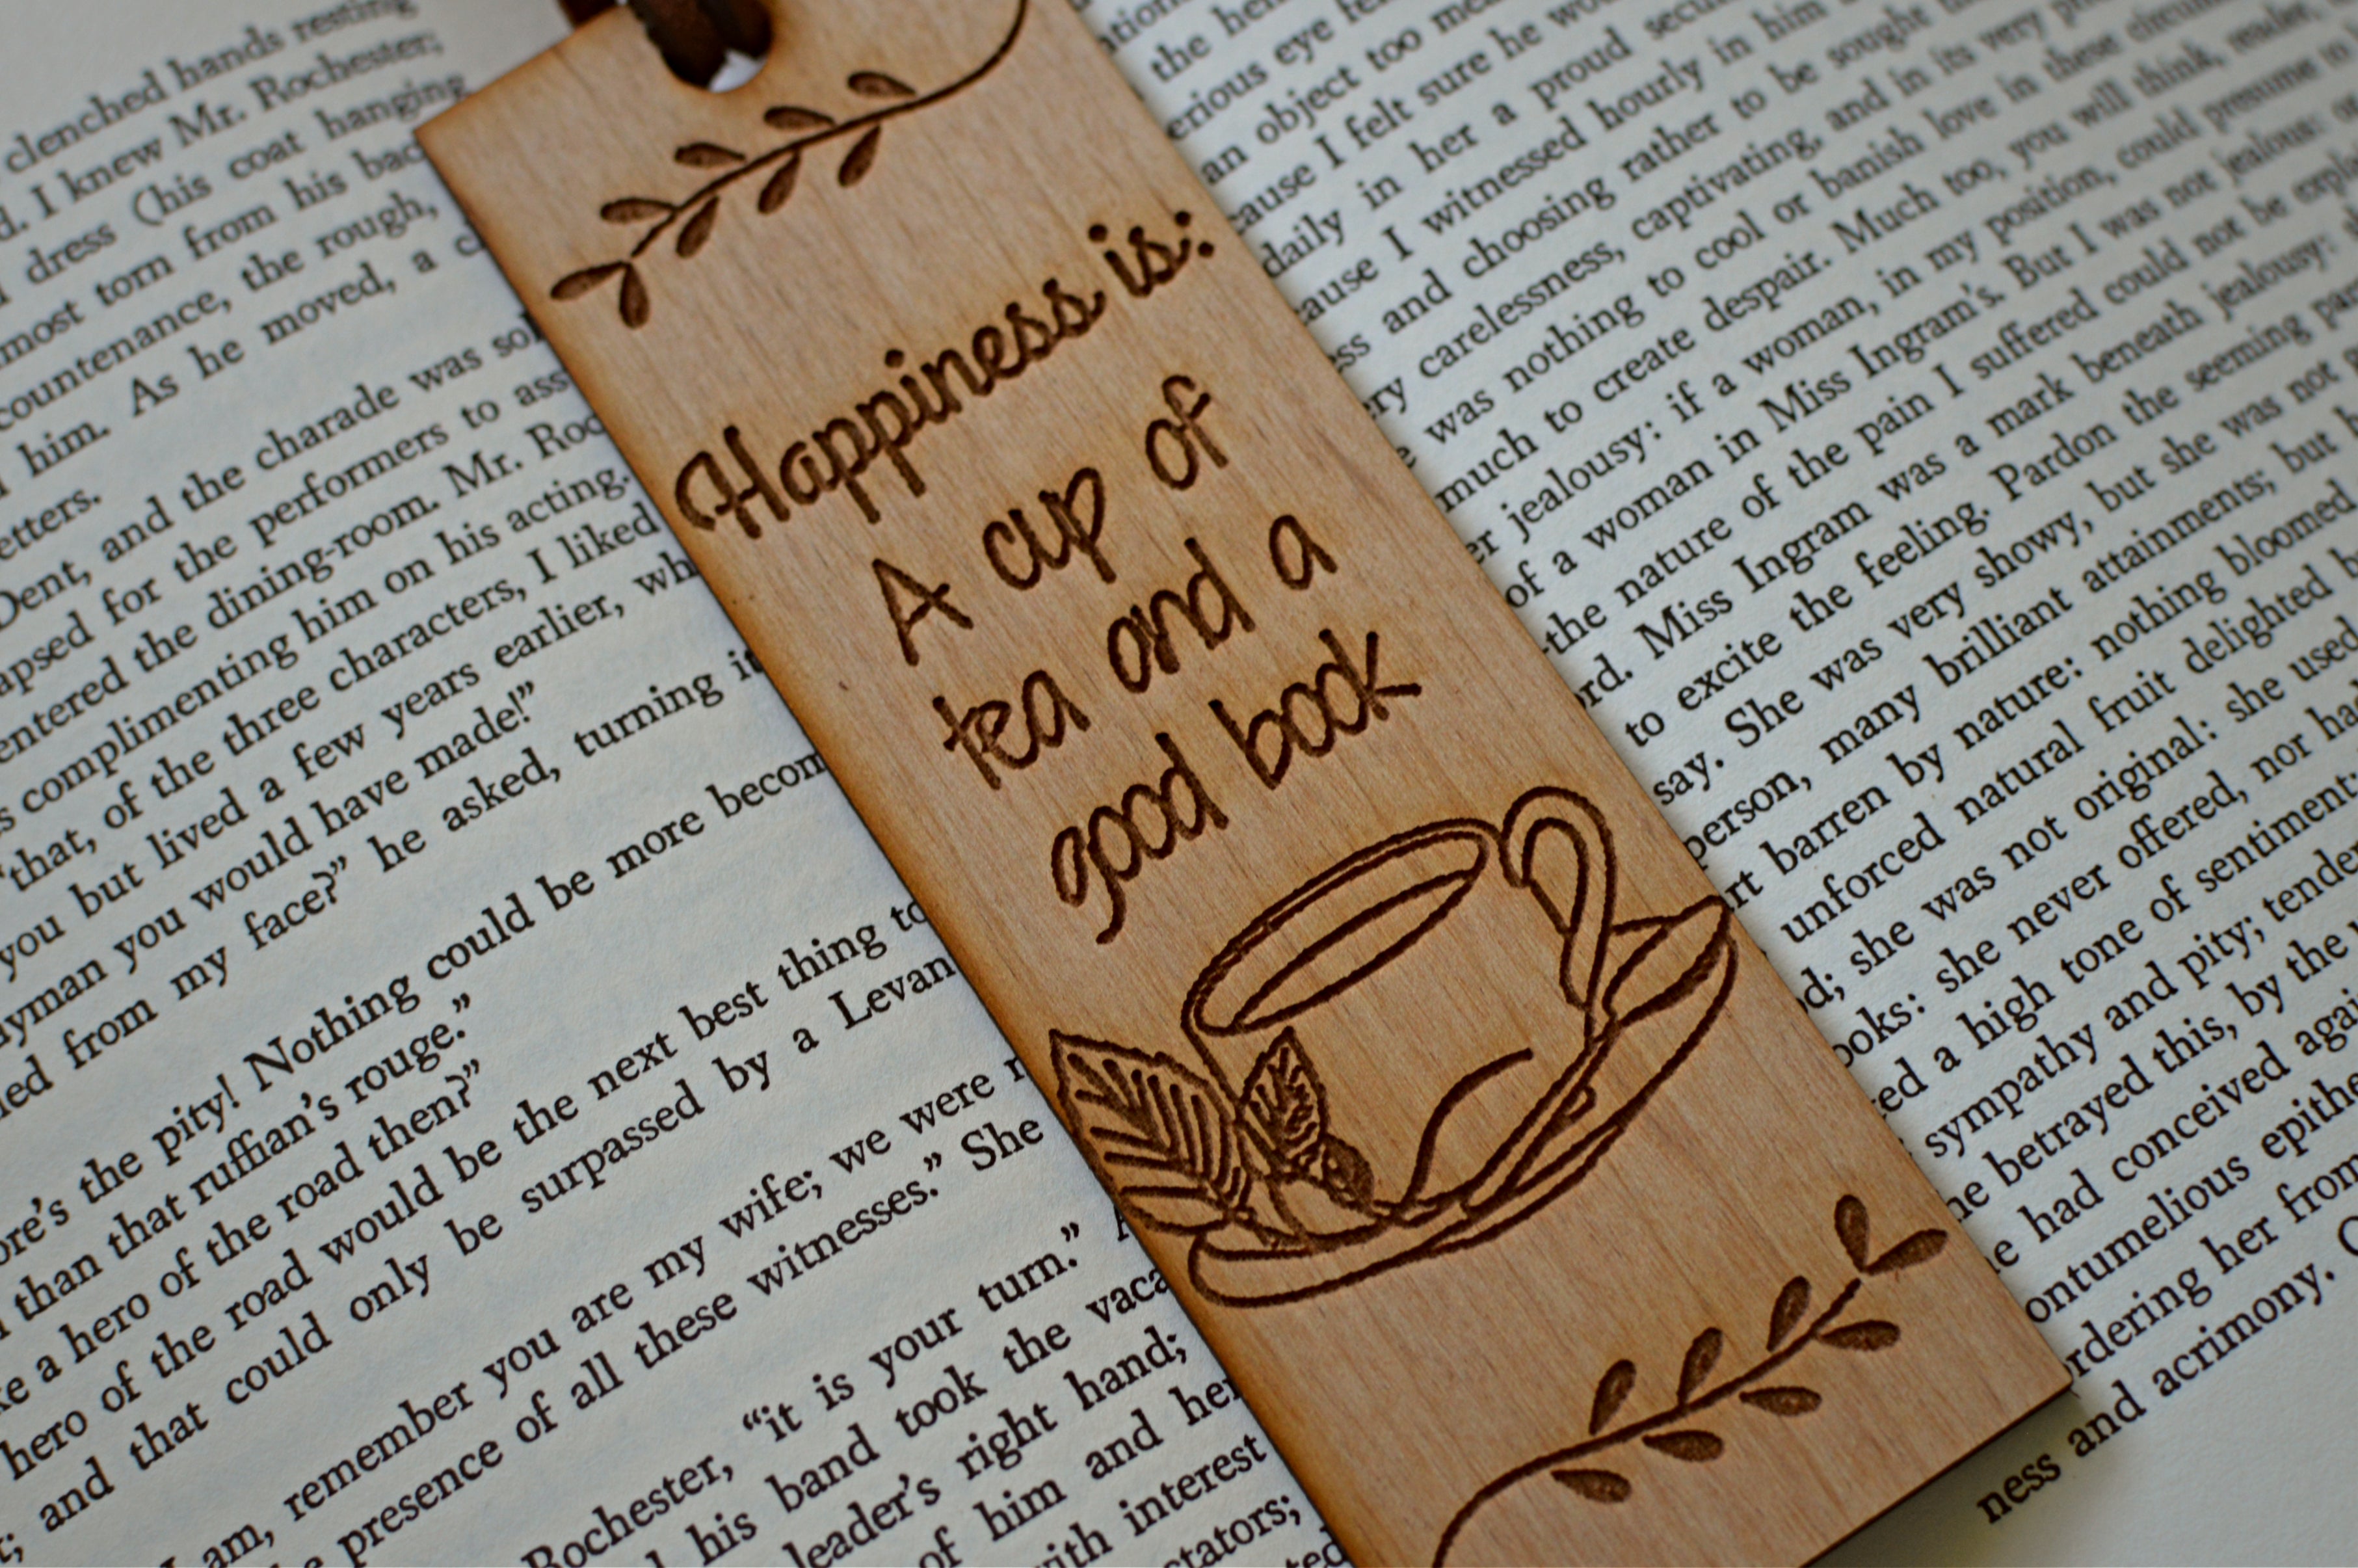 Laser Engraved Wood Bookmark - Read More - Book Mark